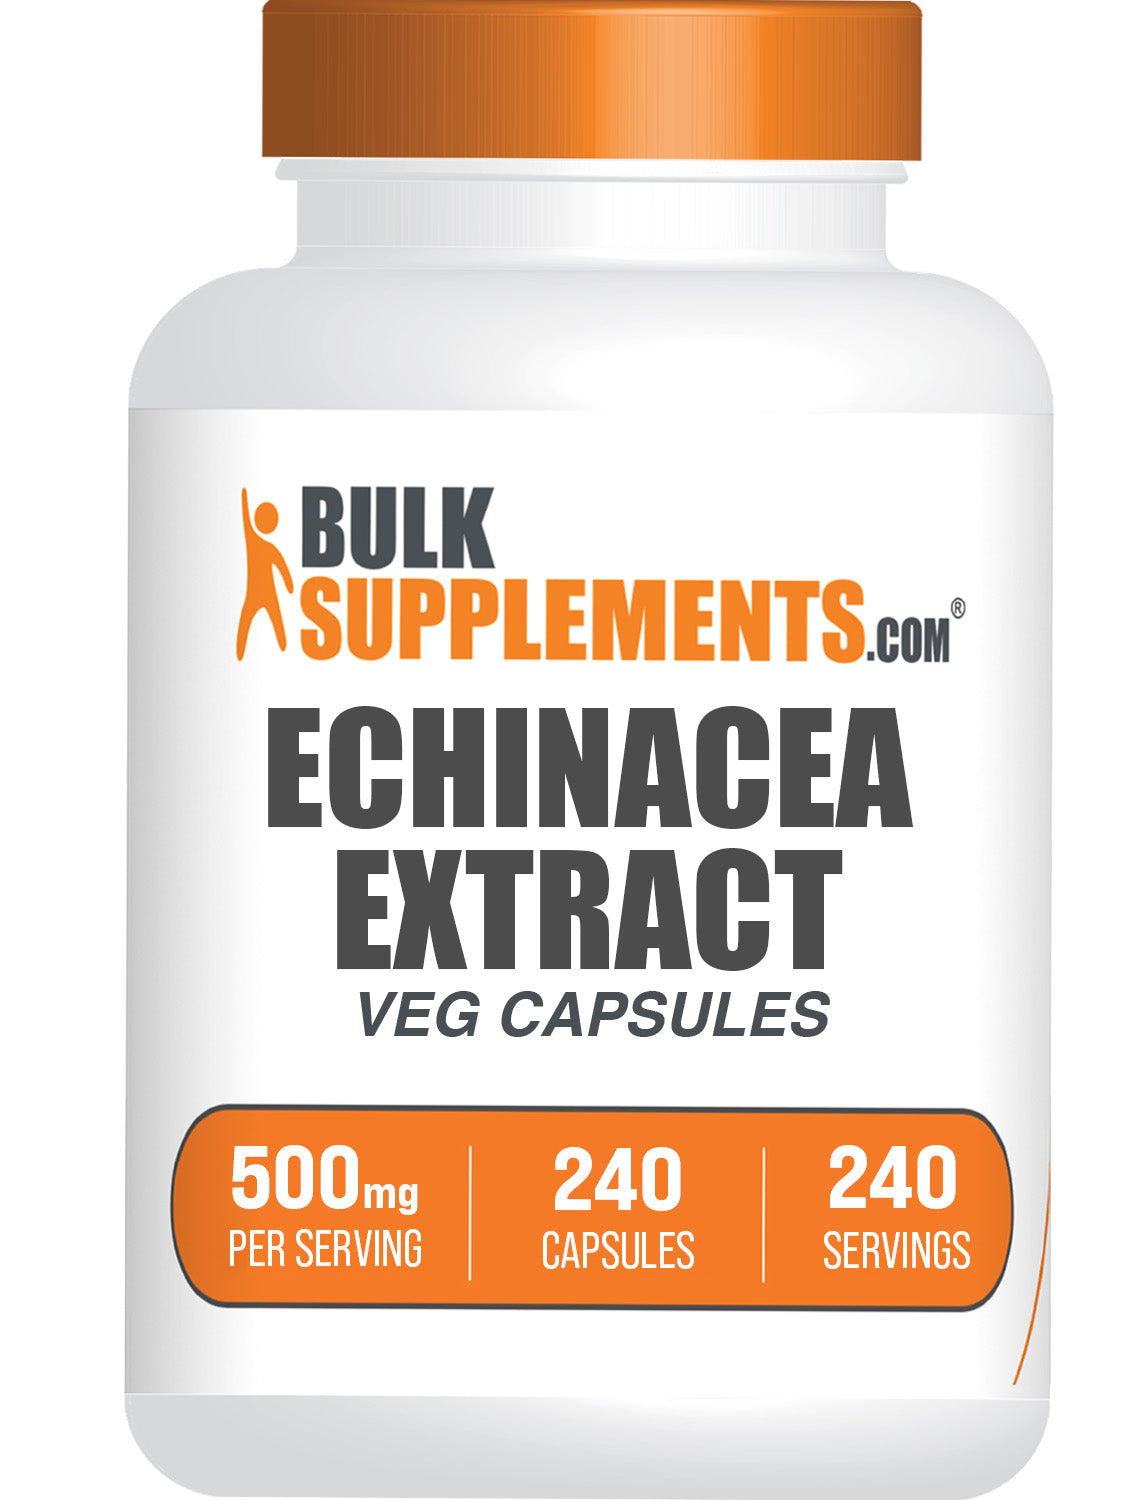 BulkSupplements.com Echinacea Extract Capsules 240ct bottle image